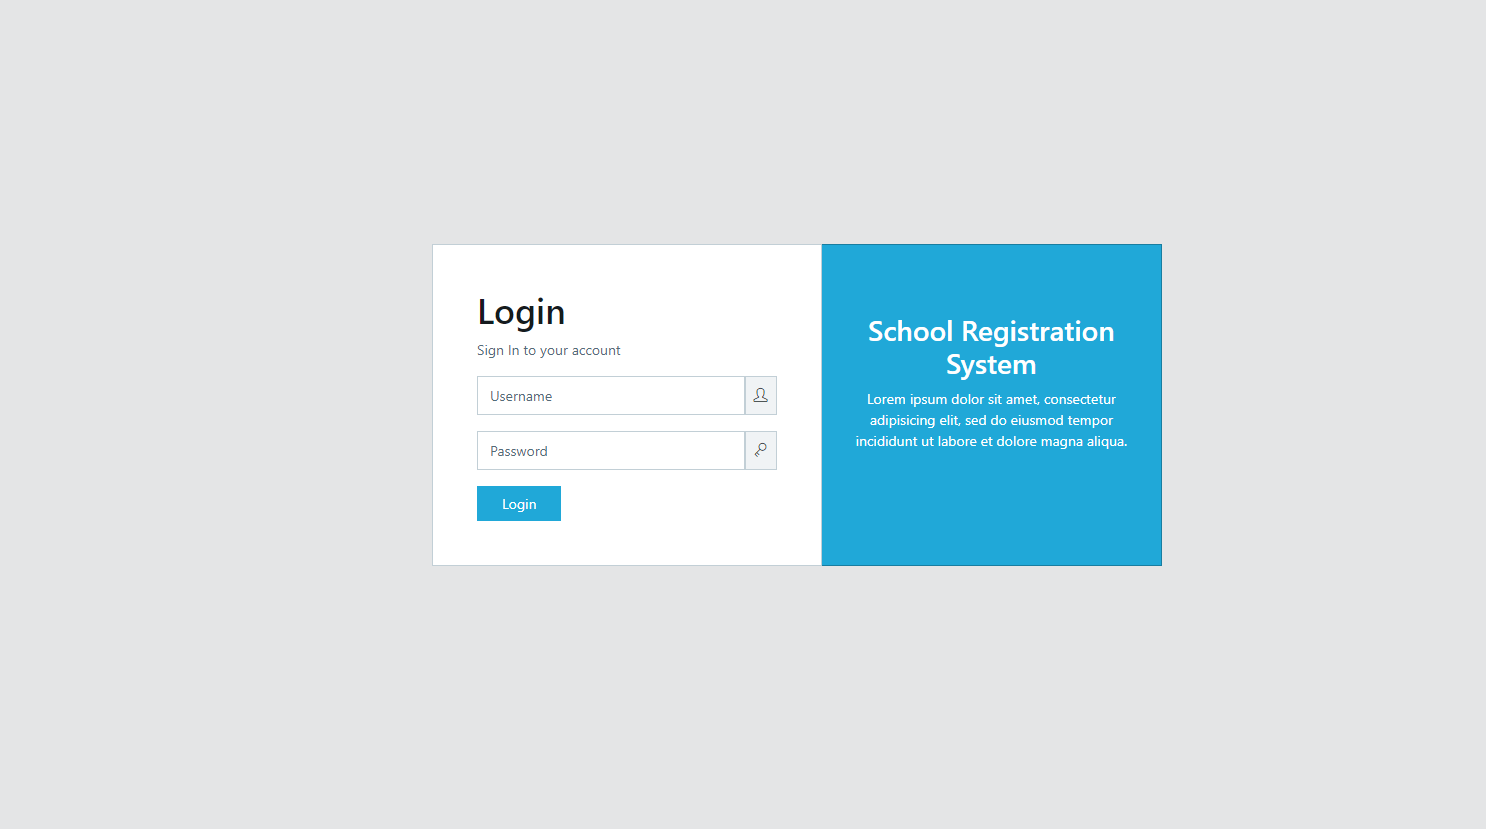 School Registration System